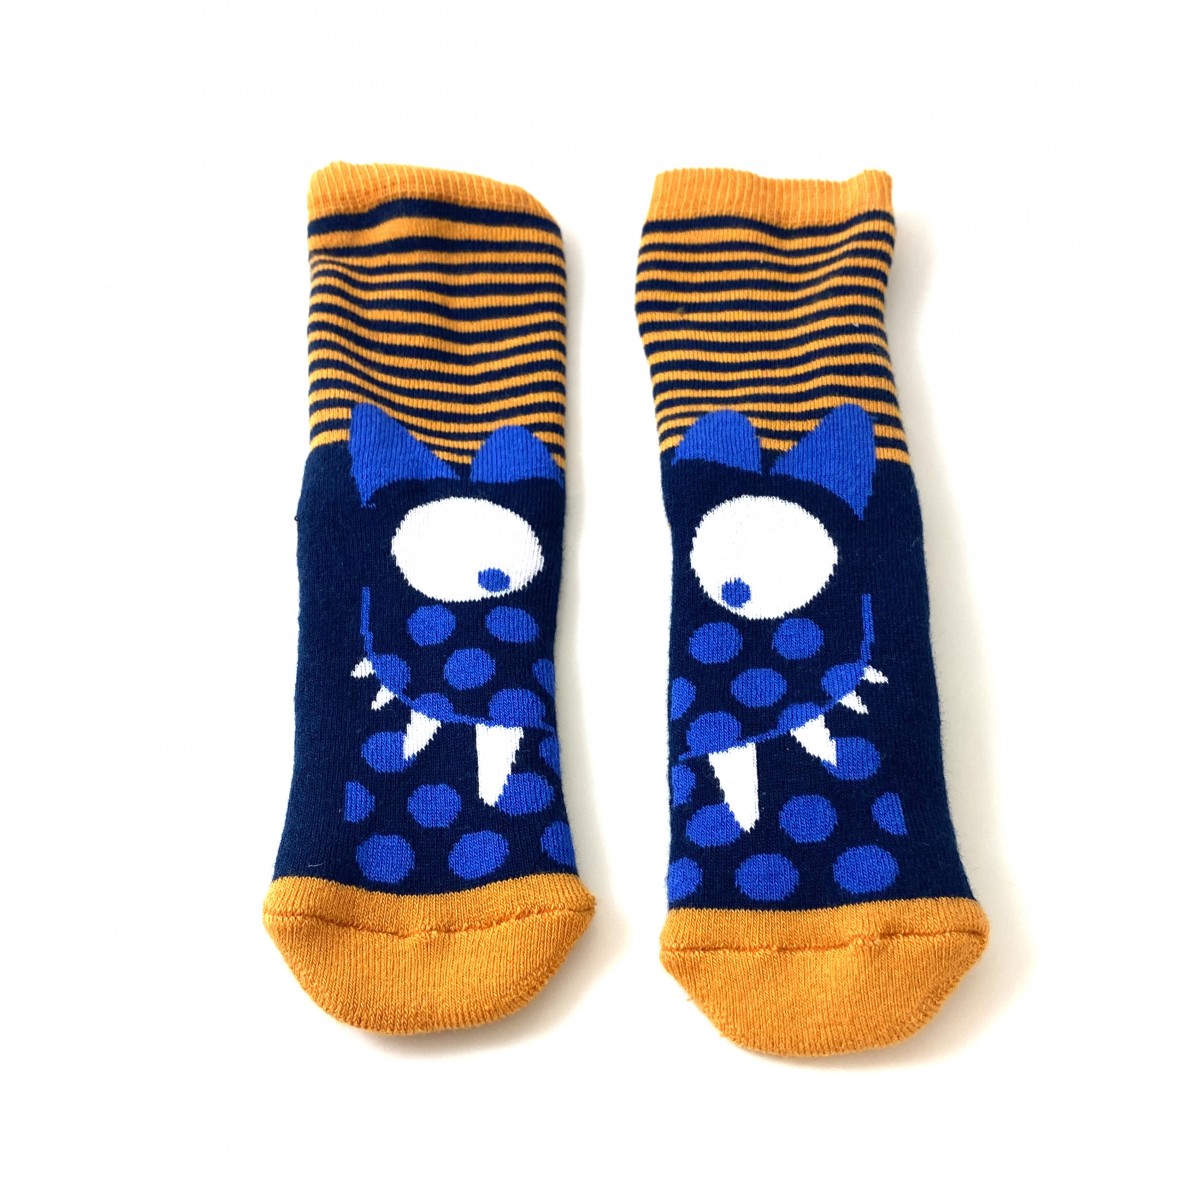 Isotoner calcetines niño monstruo Iso67088 Talla 19 Color Bleu